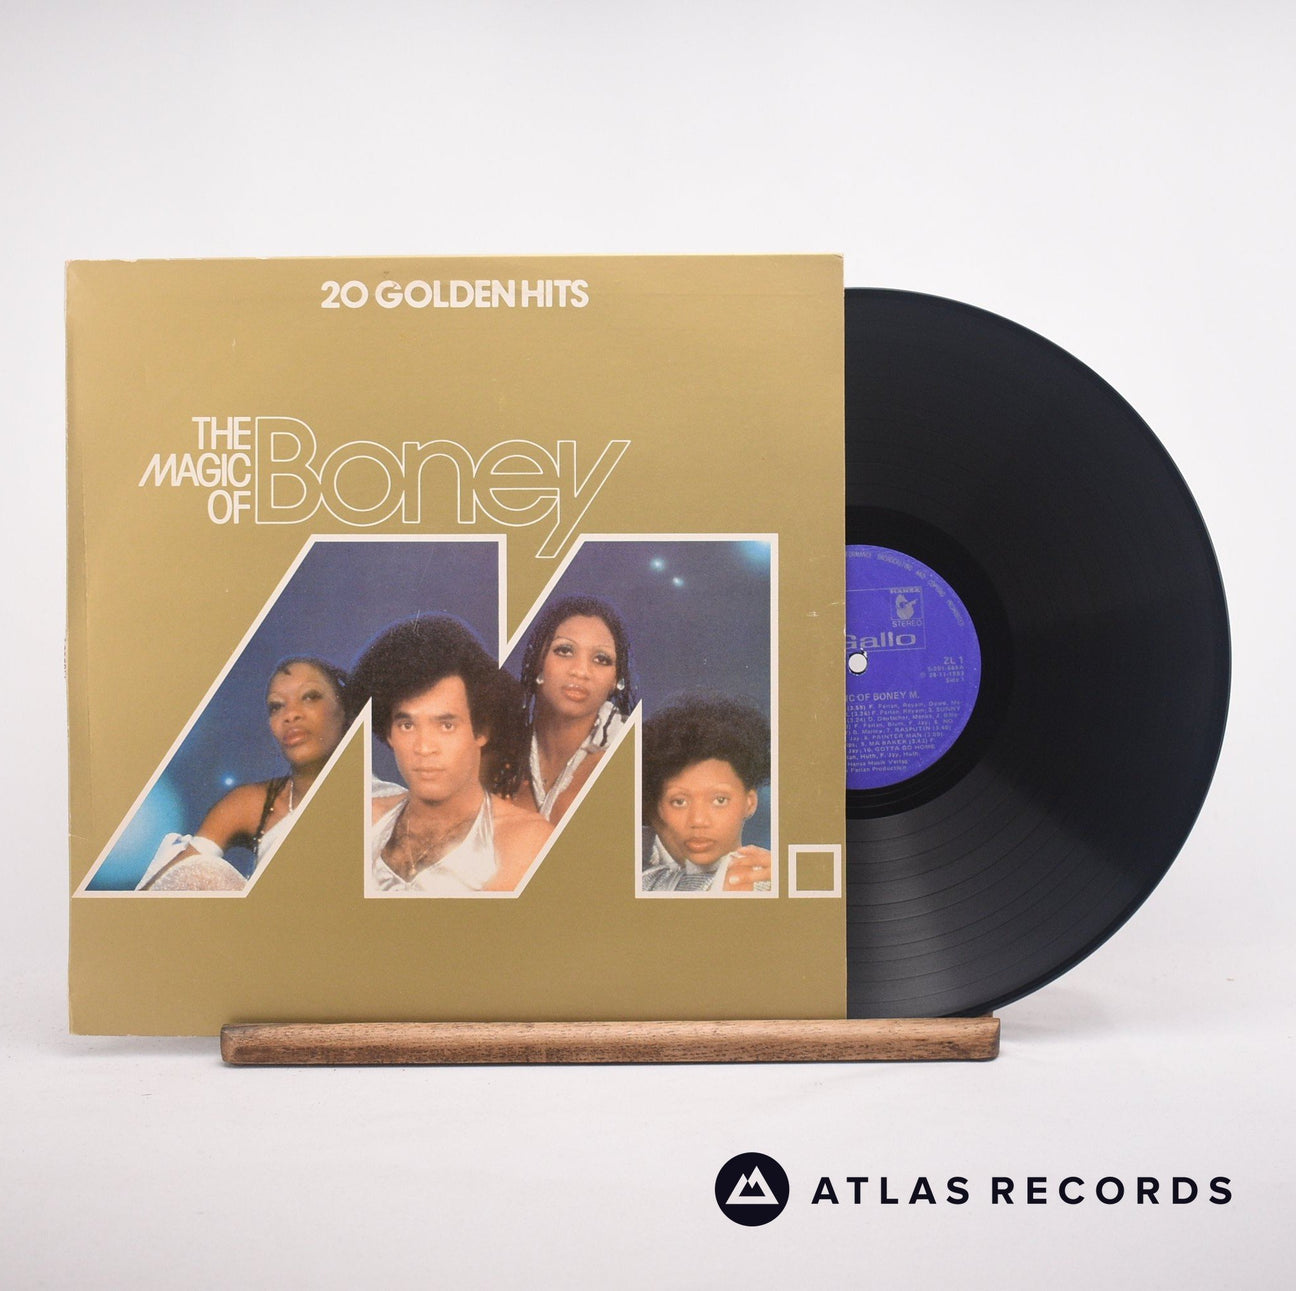 Boney M. The Magic Of Boney M. LP Vinyl Record - Front Cover & Record